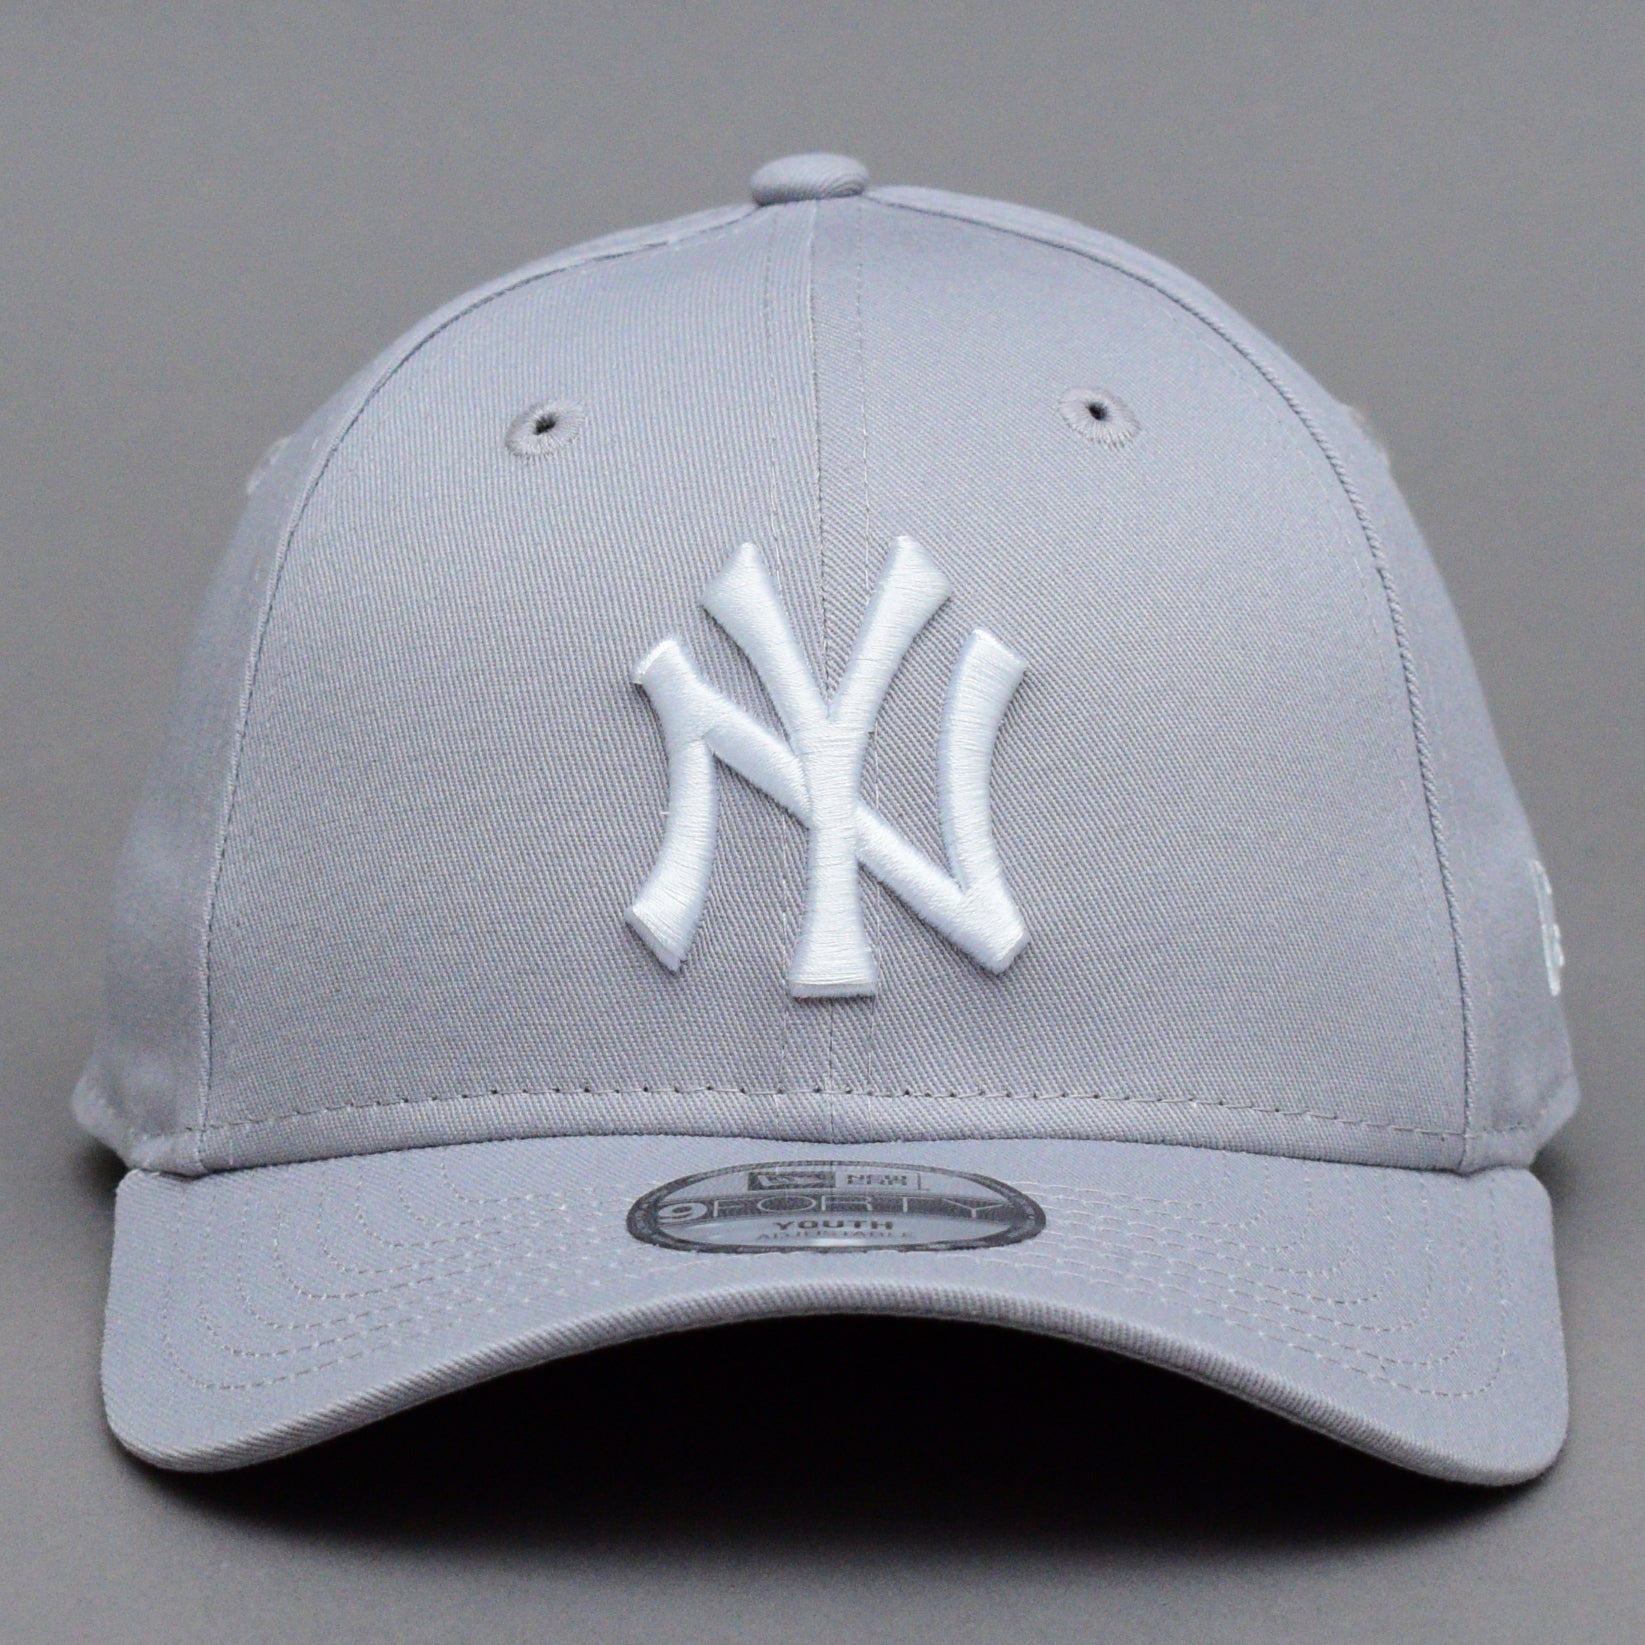 New Era MLB New York NY Yankees 9Forty Essential Child Kids Børne Caps Adjustable Justerbar Grey White Grå Hvid 10879075